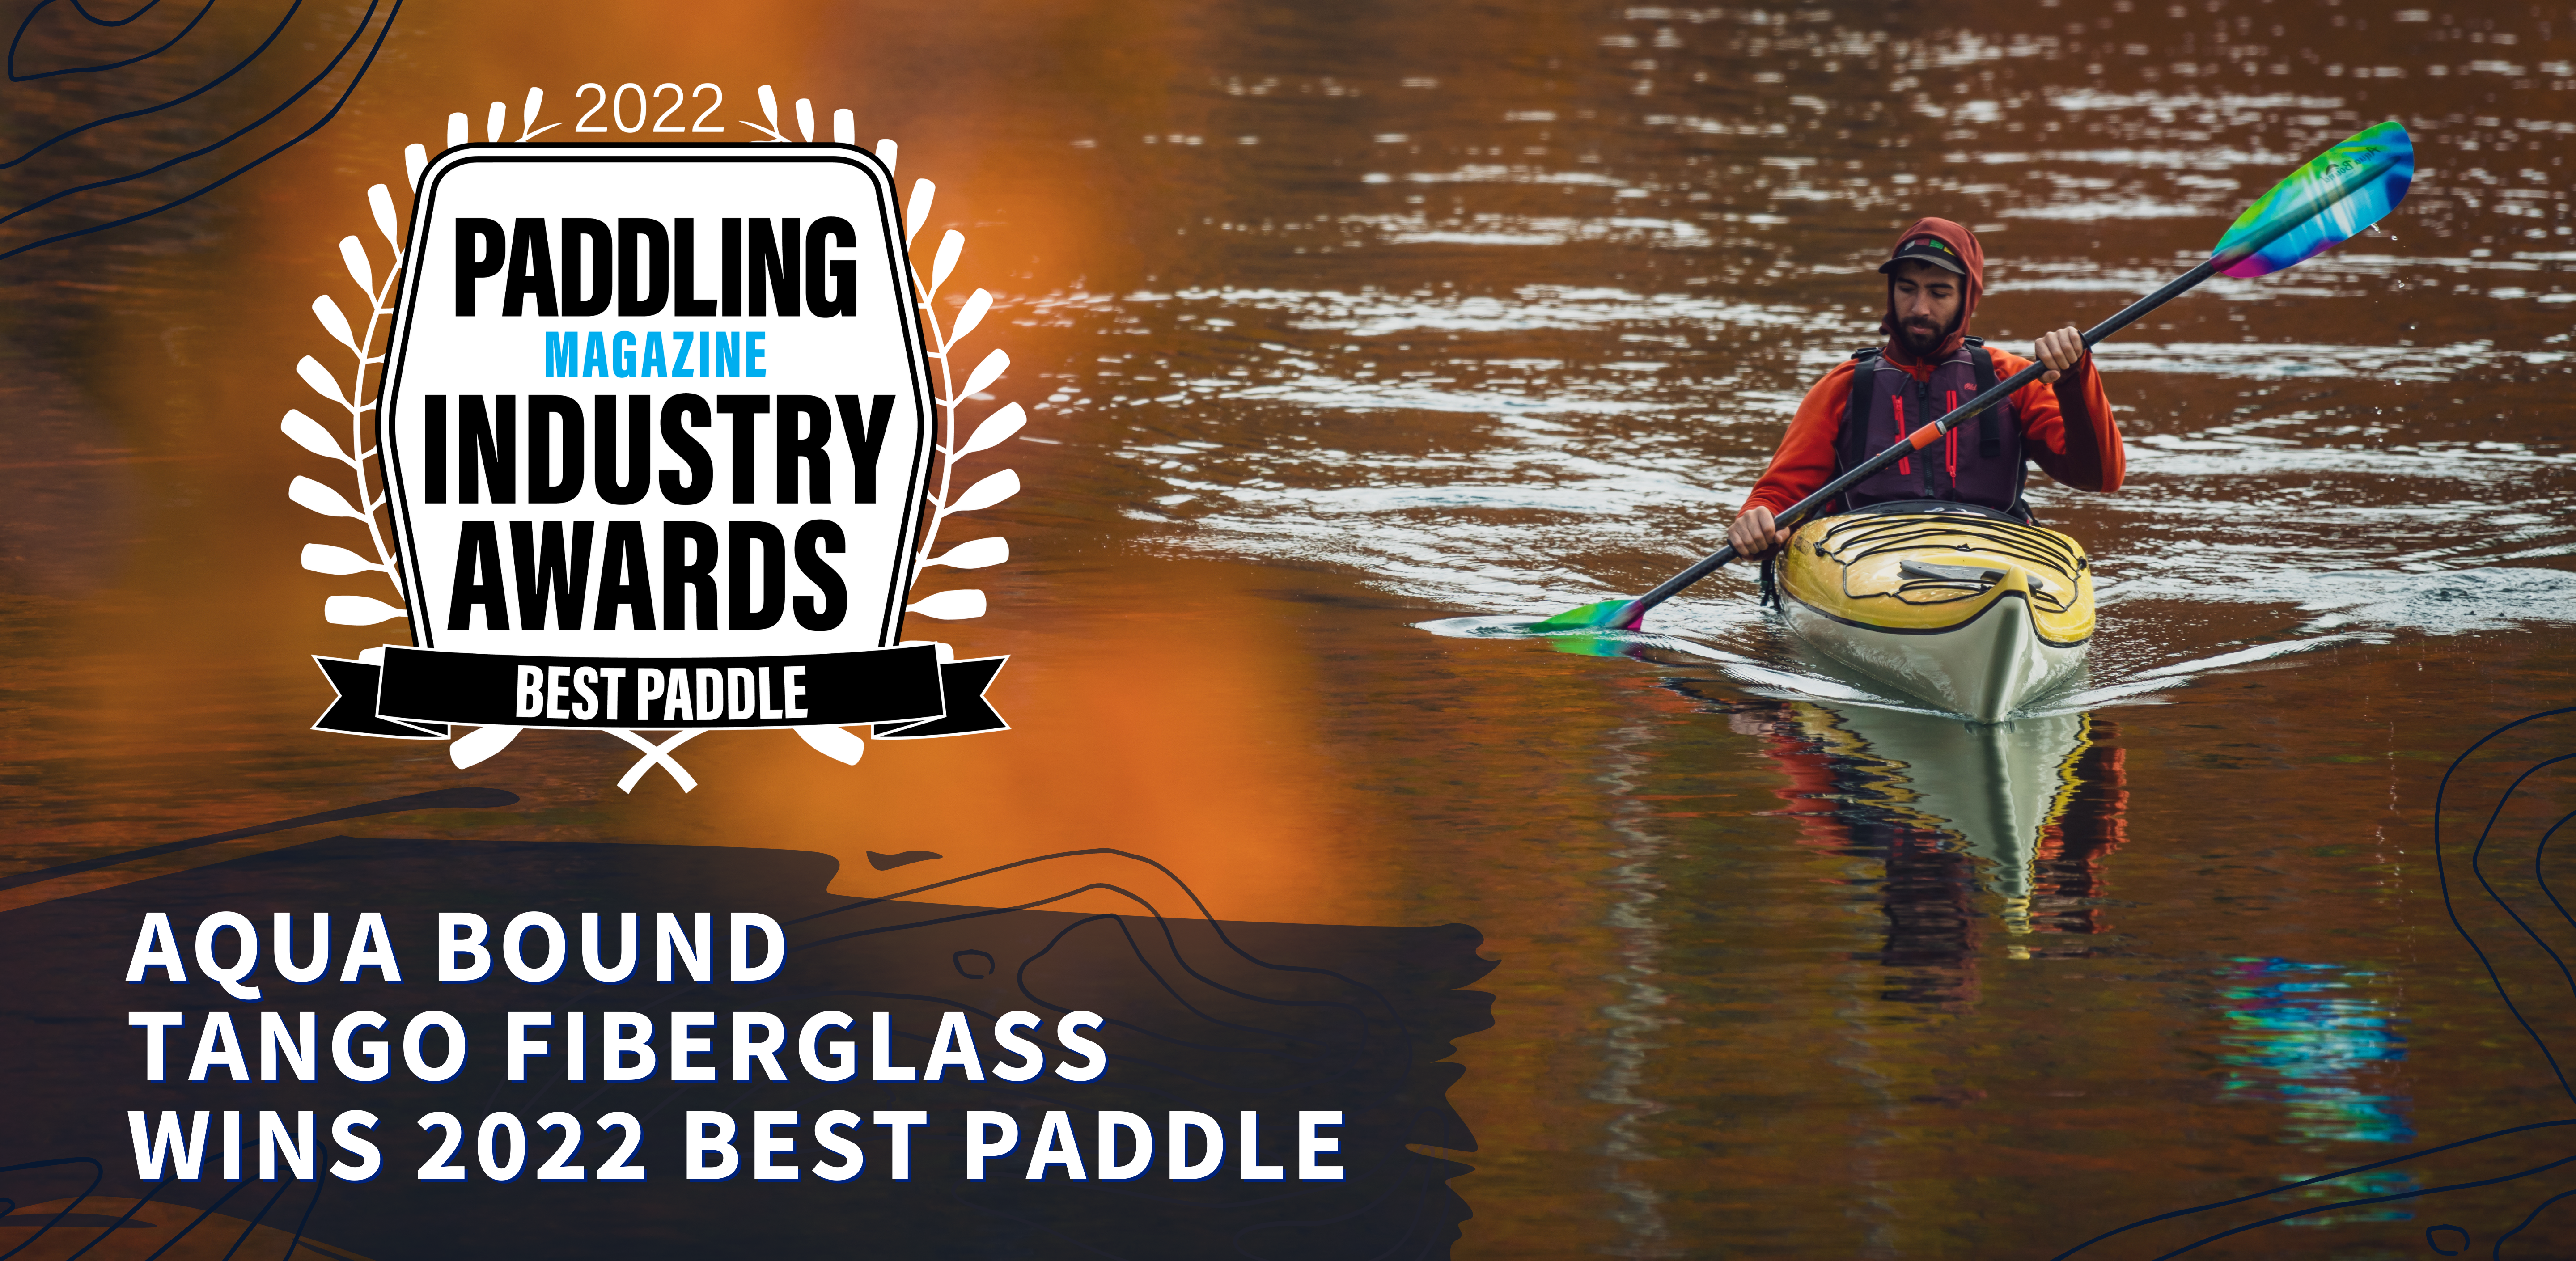 2022 Paddling Magazine Industry Awards Best Paddle: Aqua Bound Tango Fiberglass